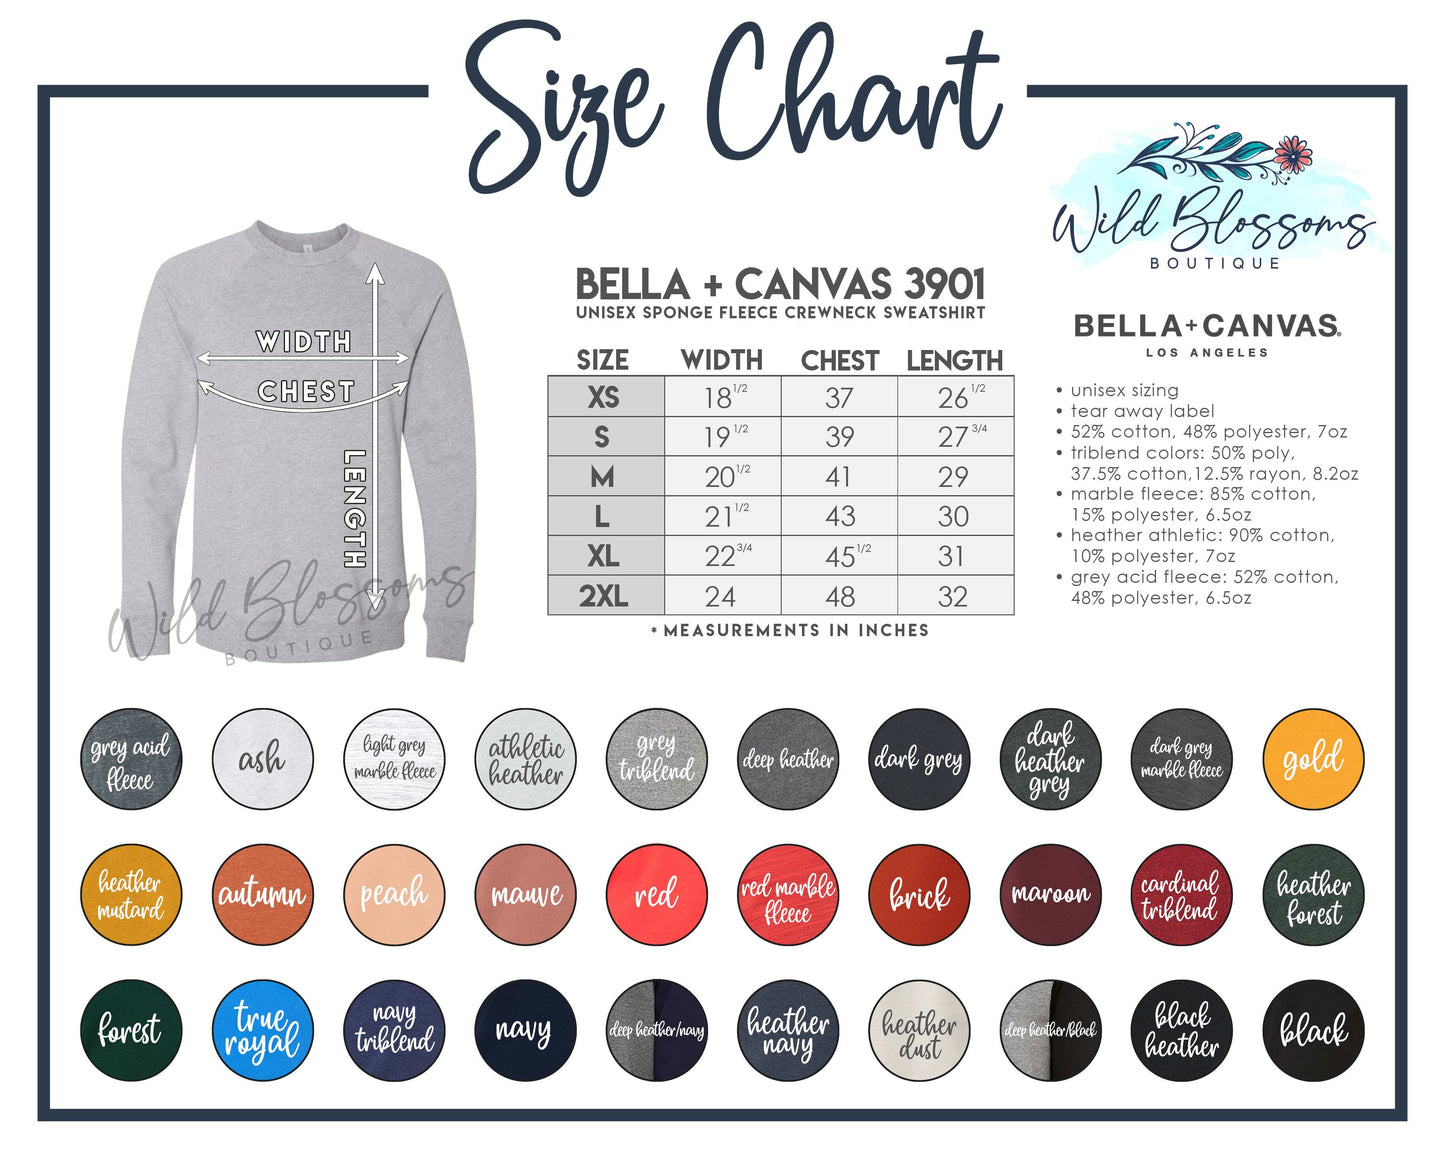 Bella + Canvas 3901 Unisex Sponge Fleece Crewneck Sweatshirt